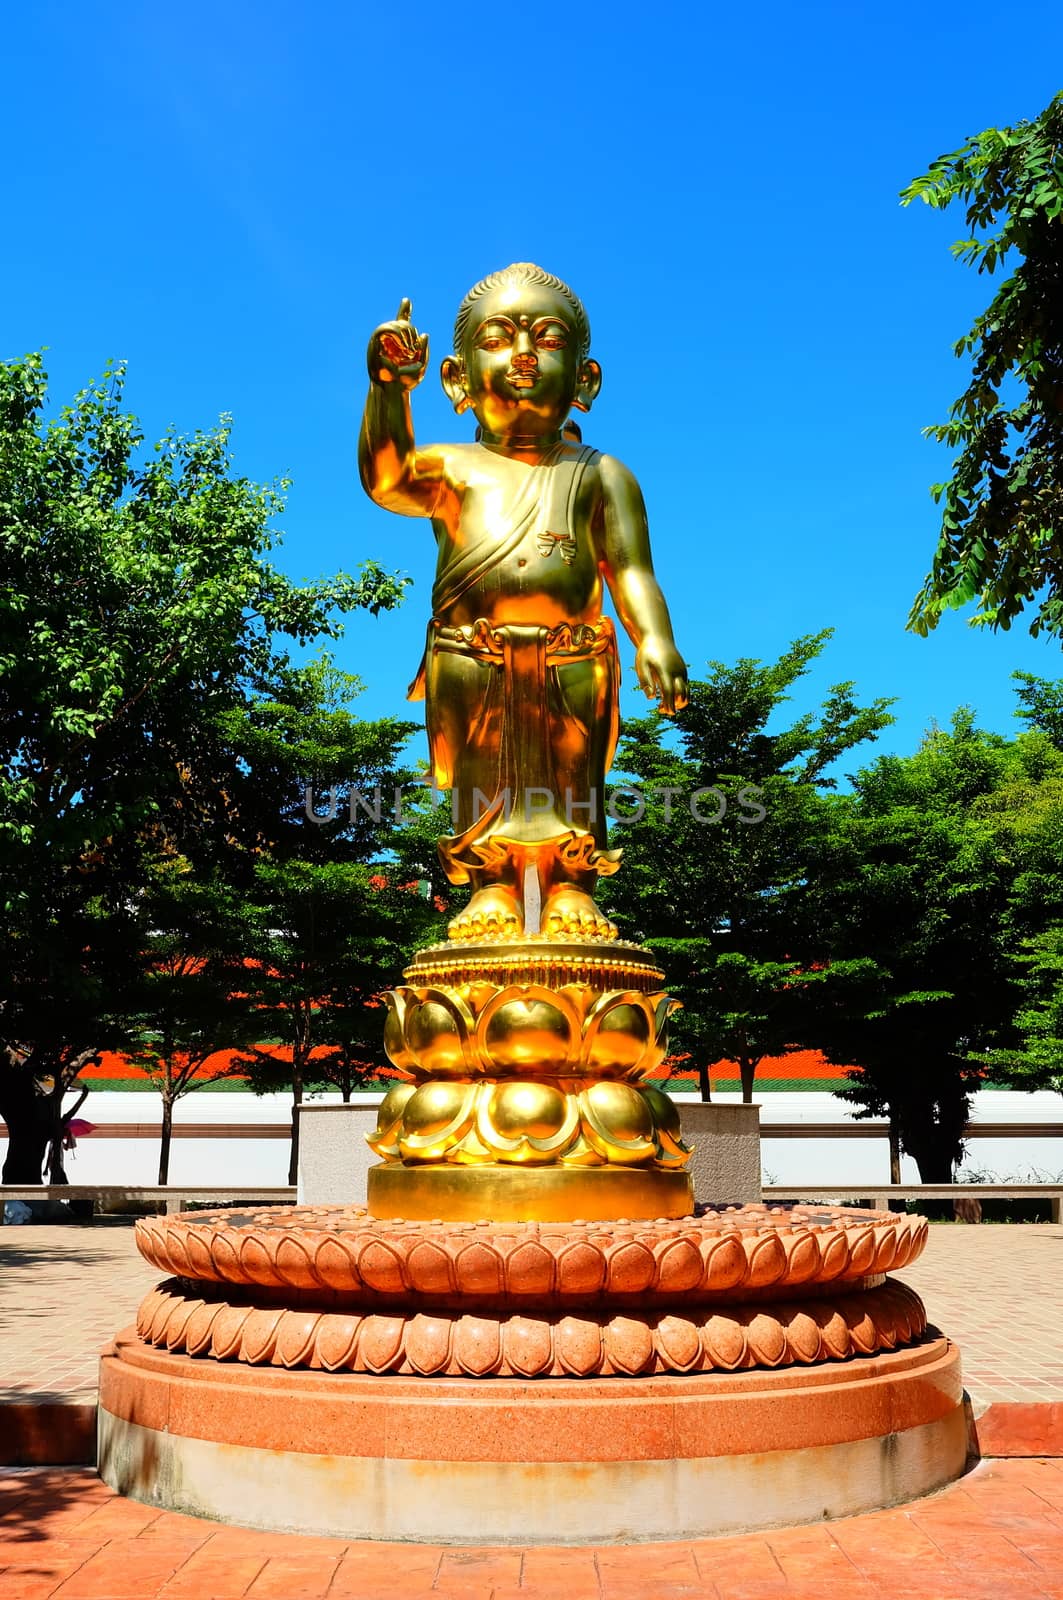 Golden Little Buddha Image in Park. by mesamong